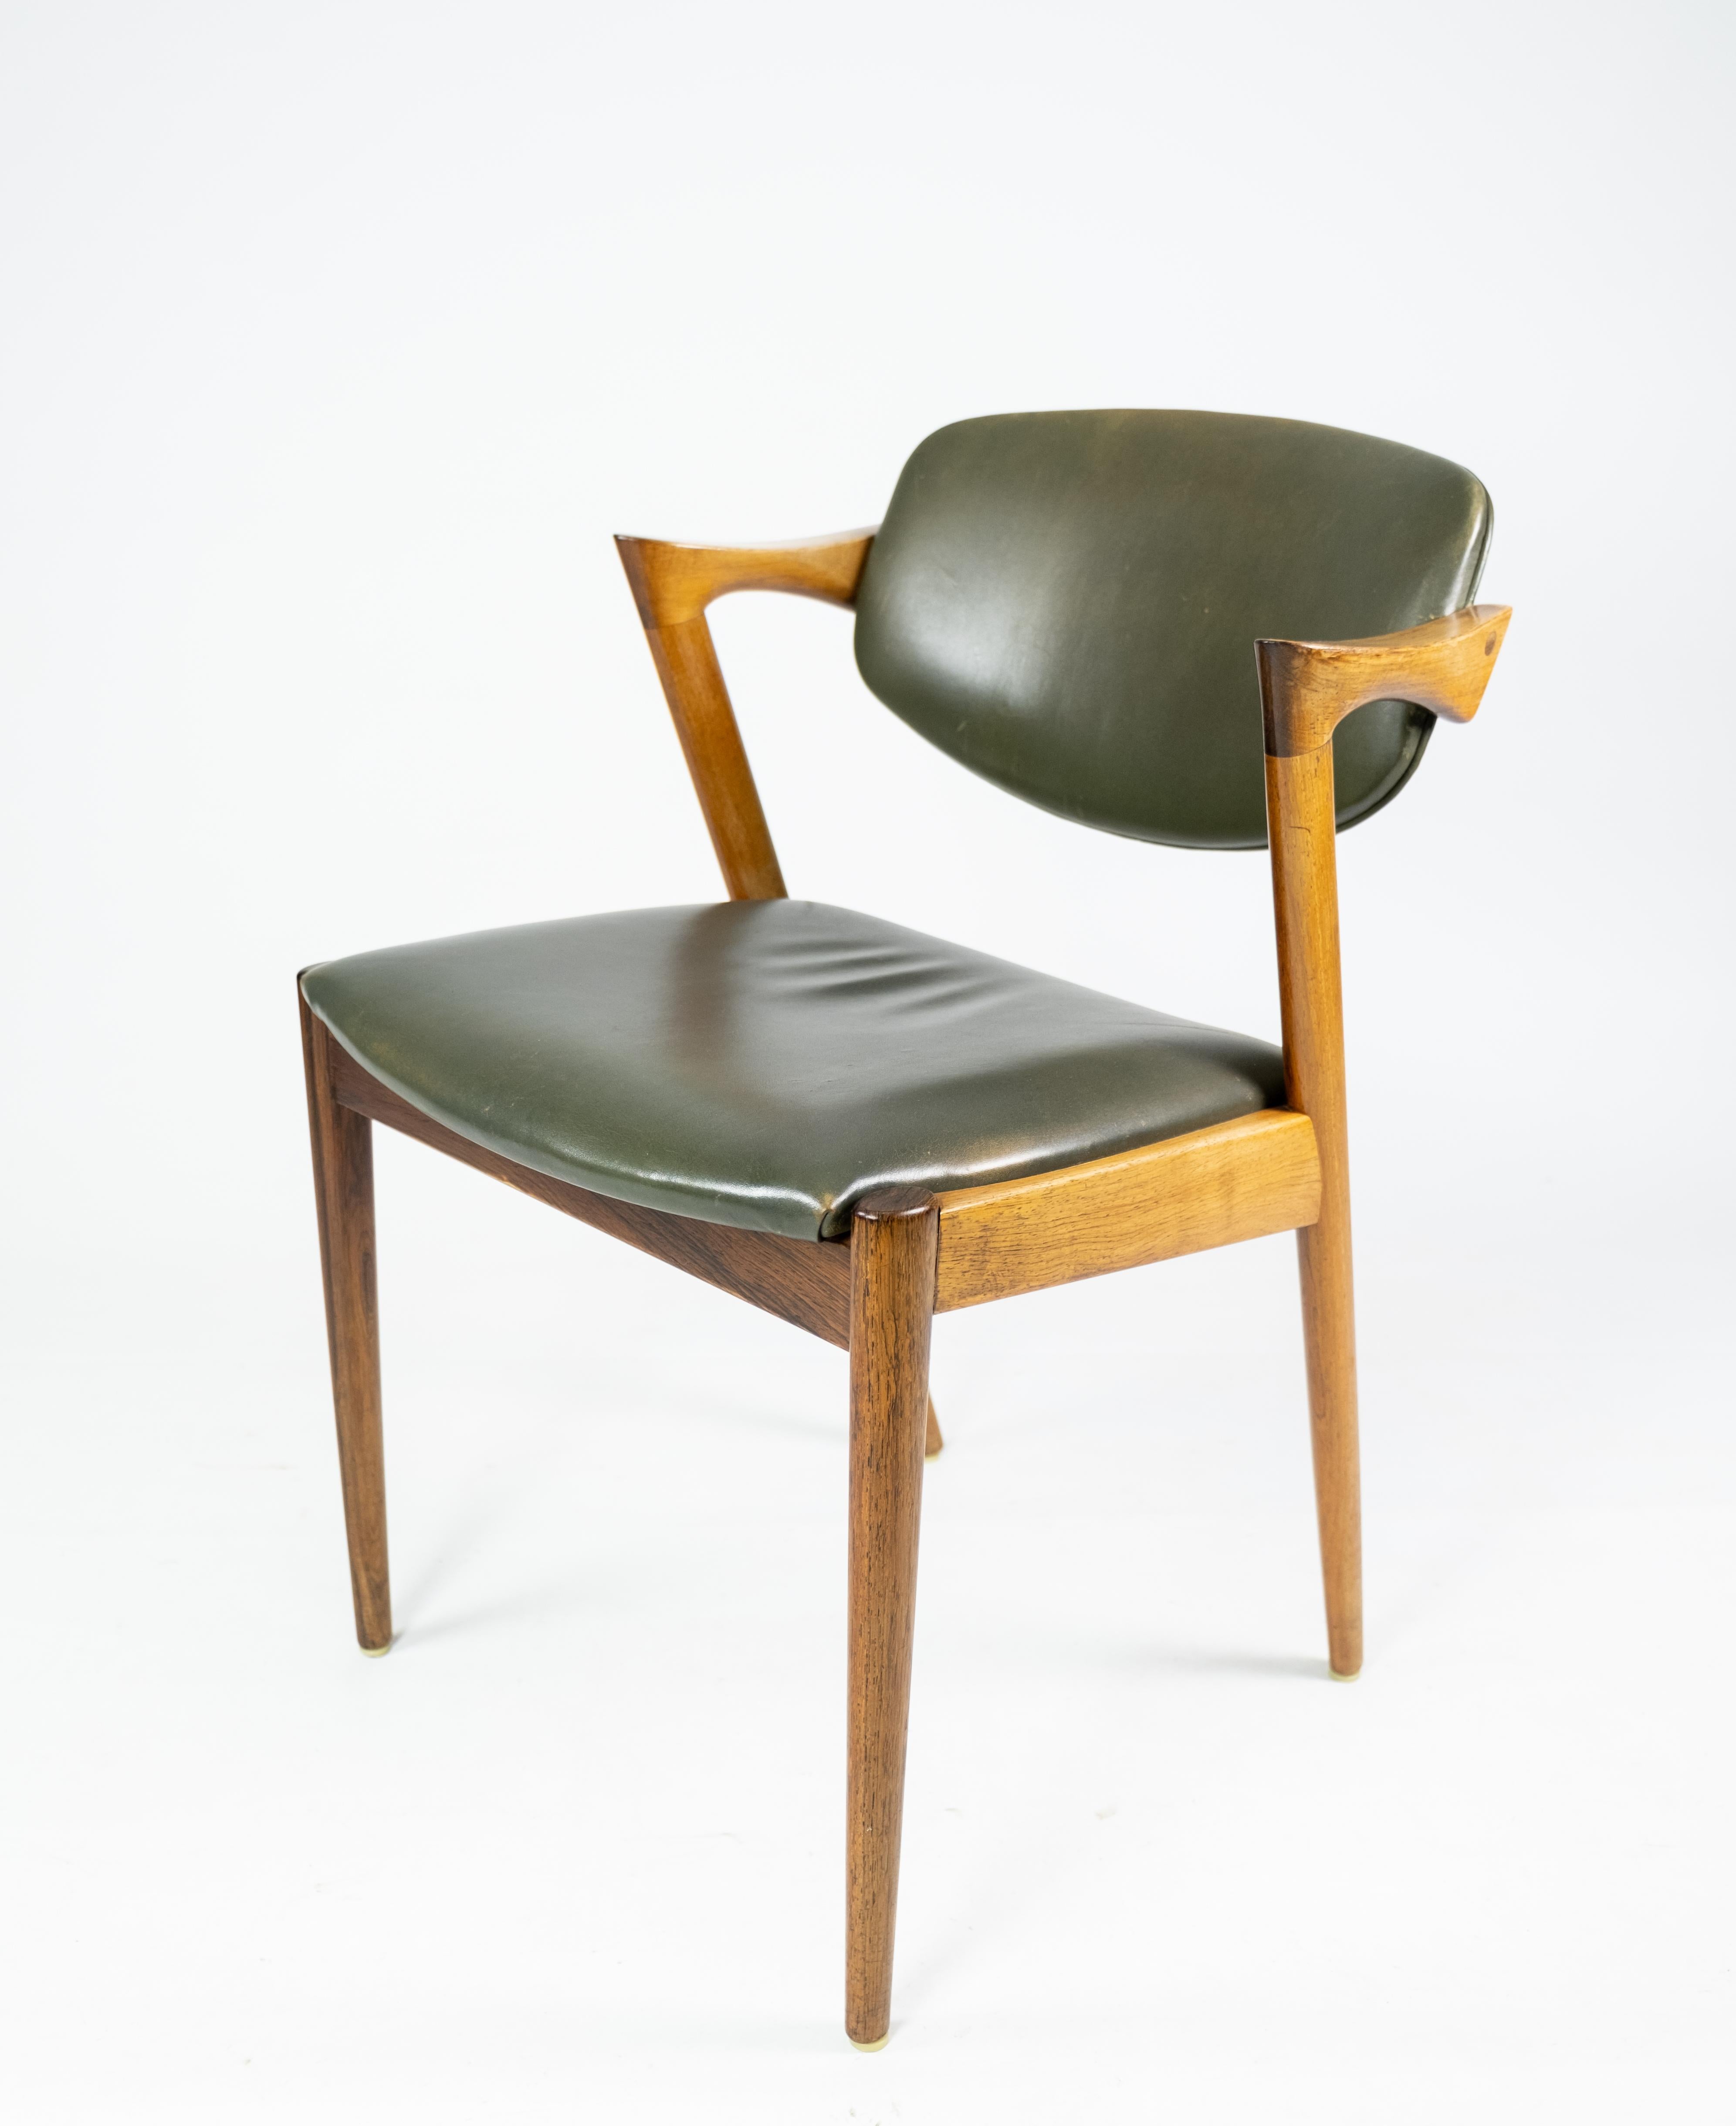 Danish Set of 4 Dining Chairs, Model 42, Designed by Kai Kristiansen, 1960s